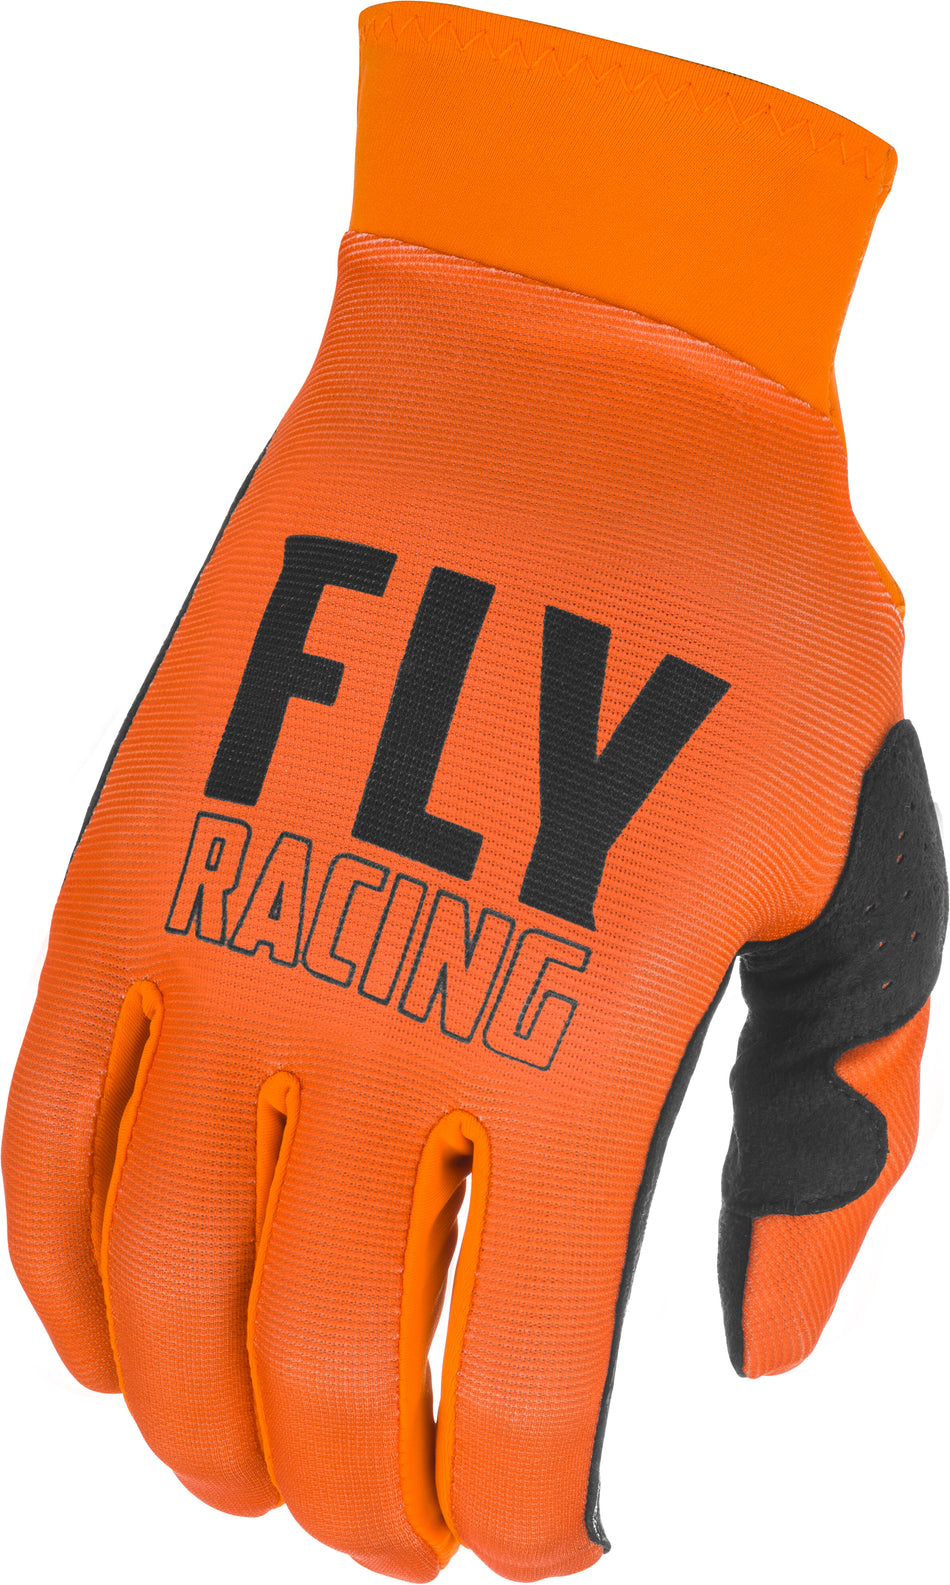 FLY RACING Pro Lite Gloves Orange/Black Sz 07 374-85807